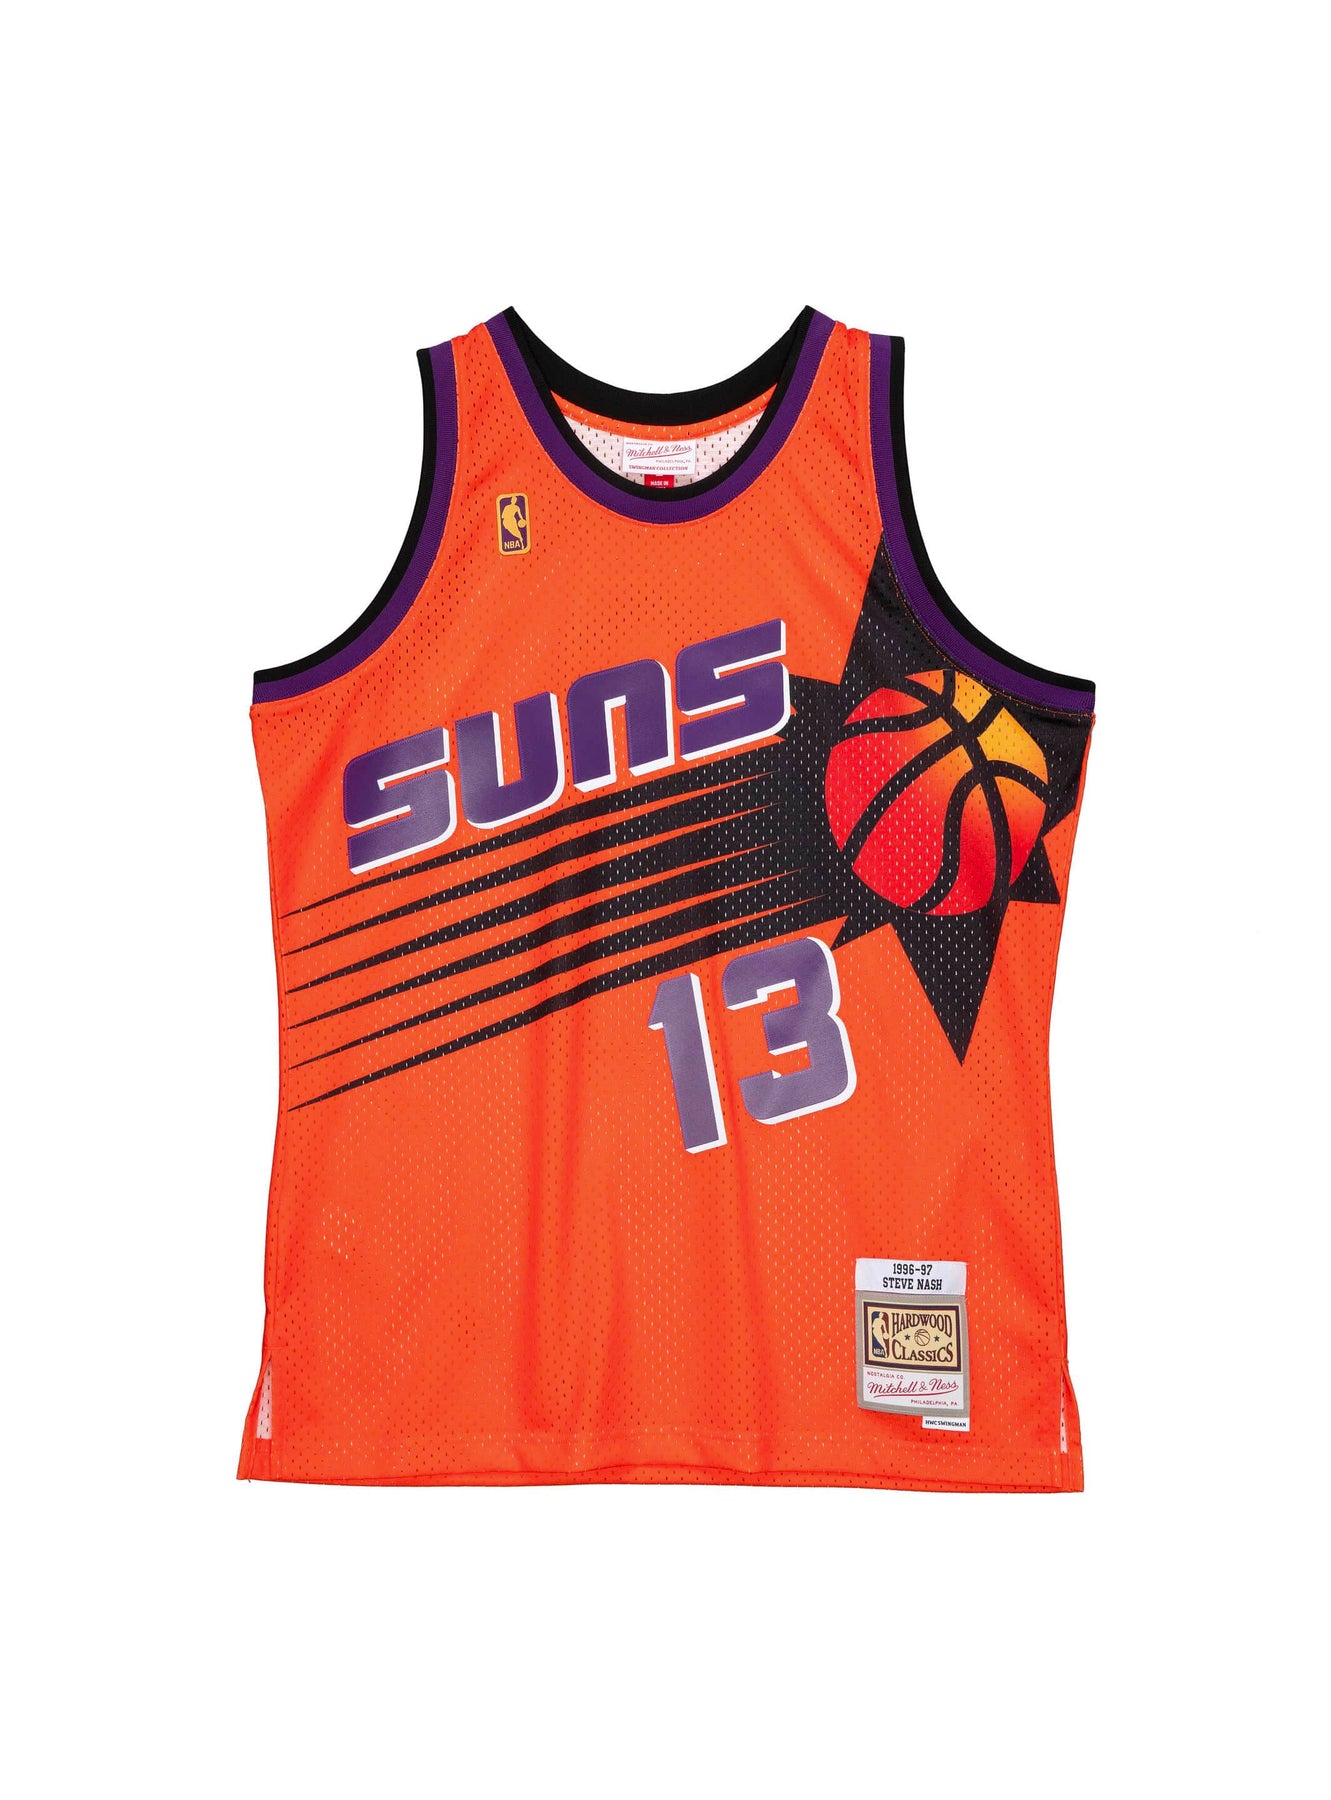 Phoenix Suns Throwback Jerseys, Vintage Jersey, Suns Classic